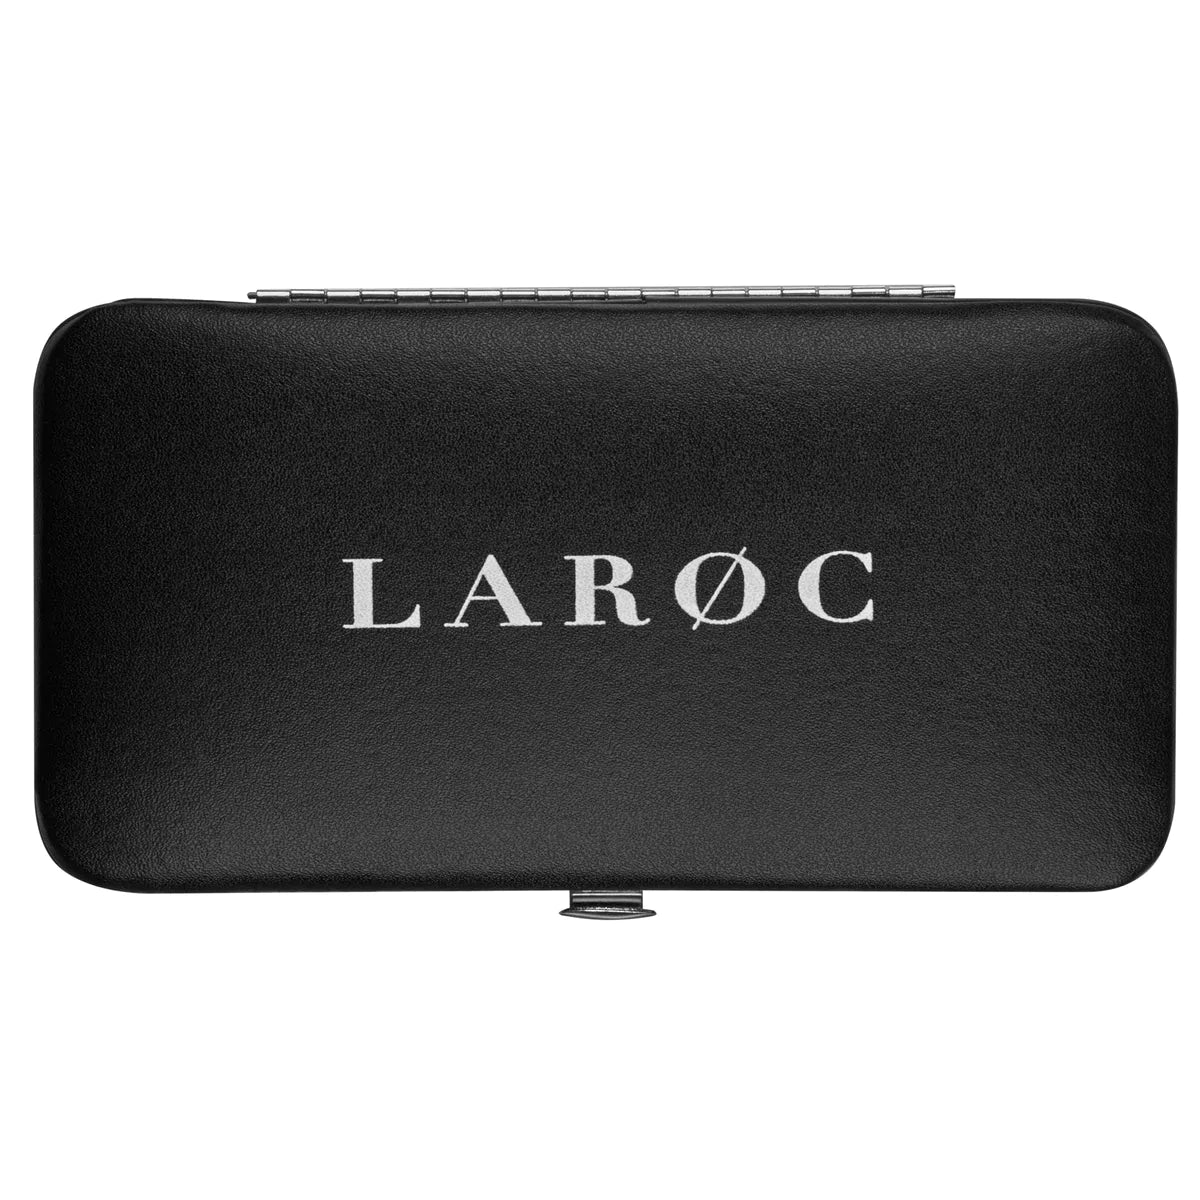 LaRoc - Manicure Kit